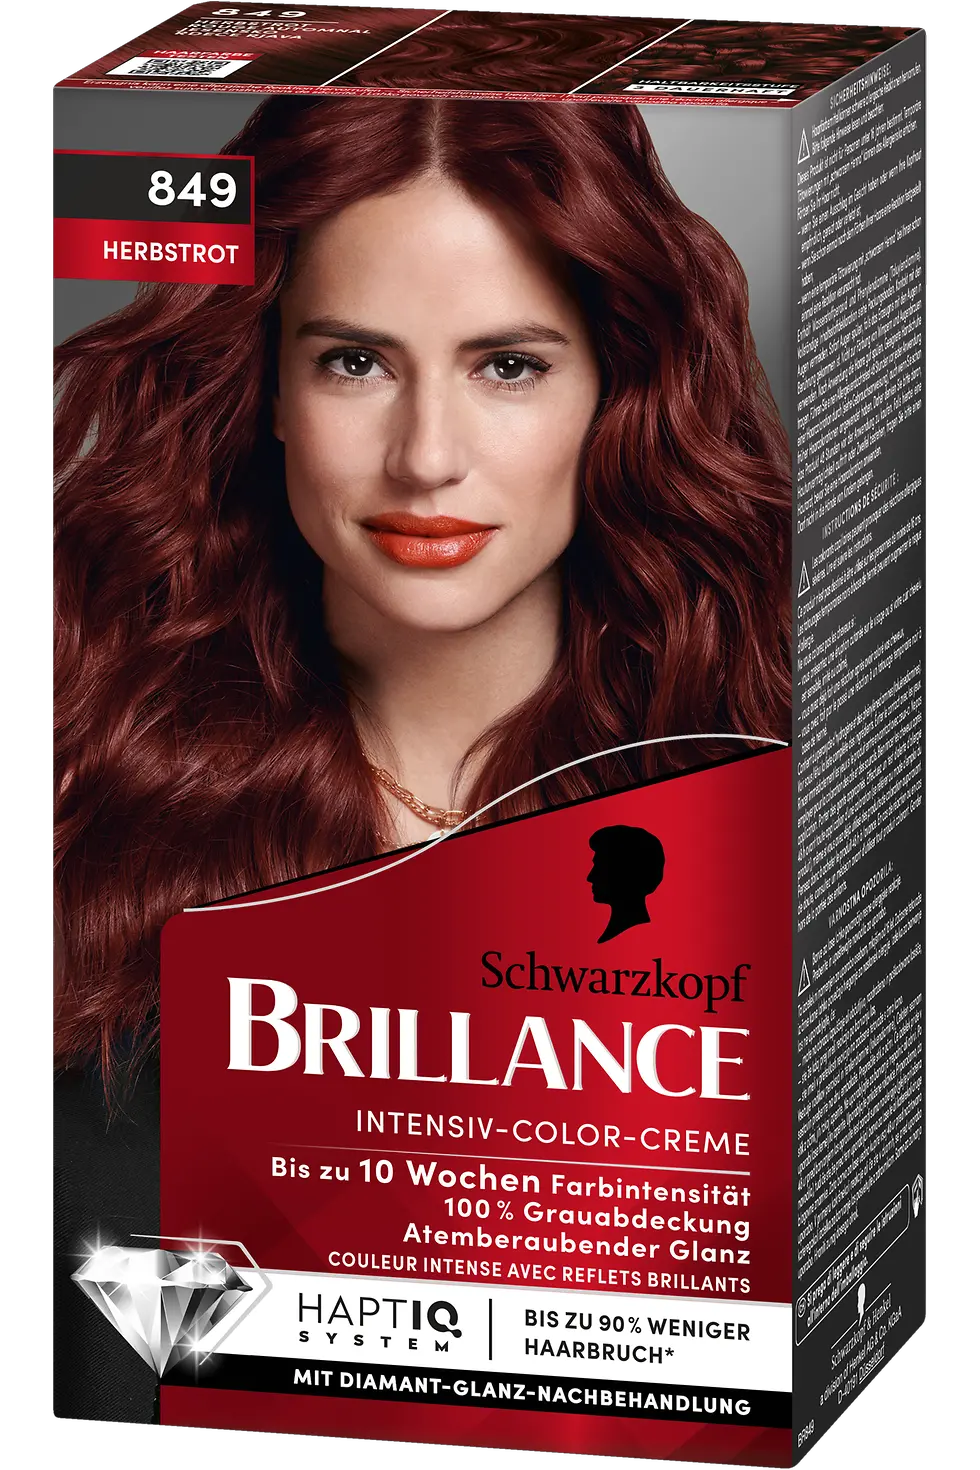 
Brillance Intensiv-Color-Creme Herbstrot